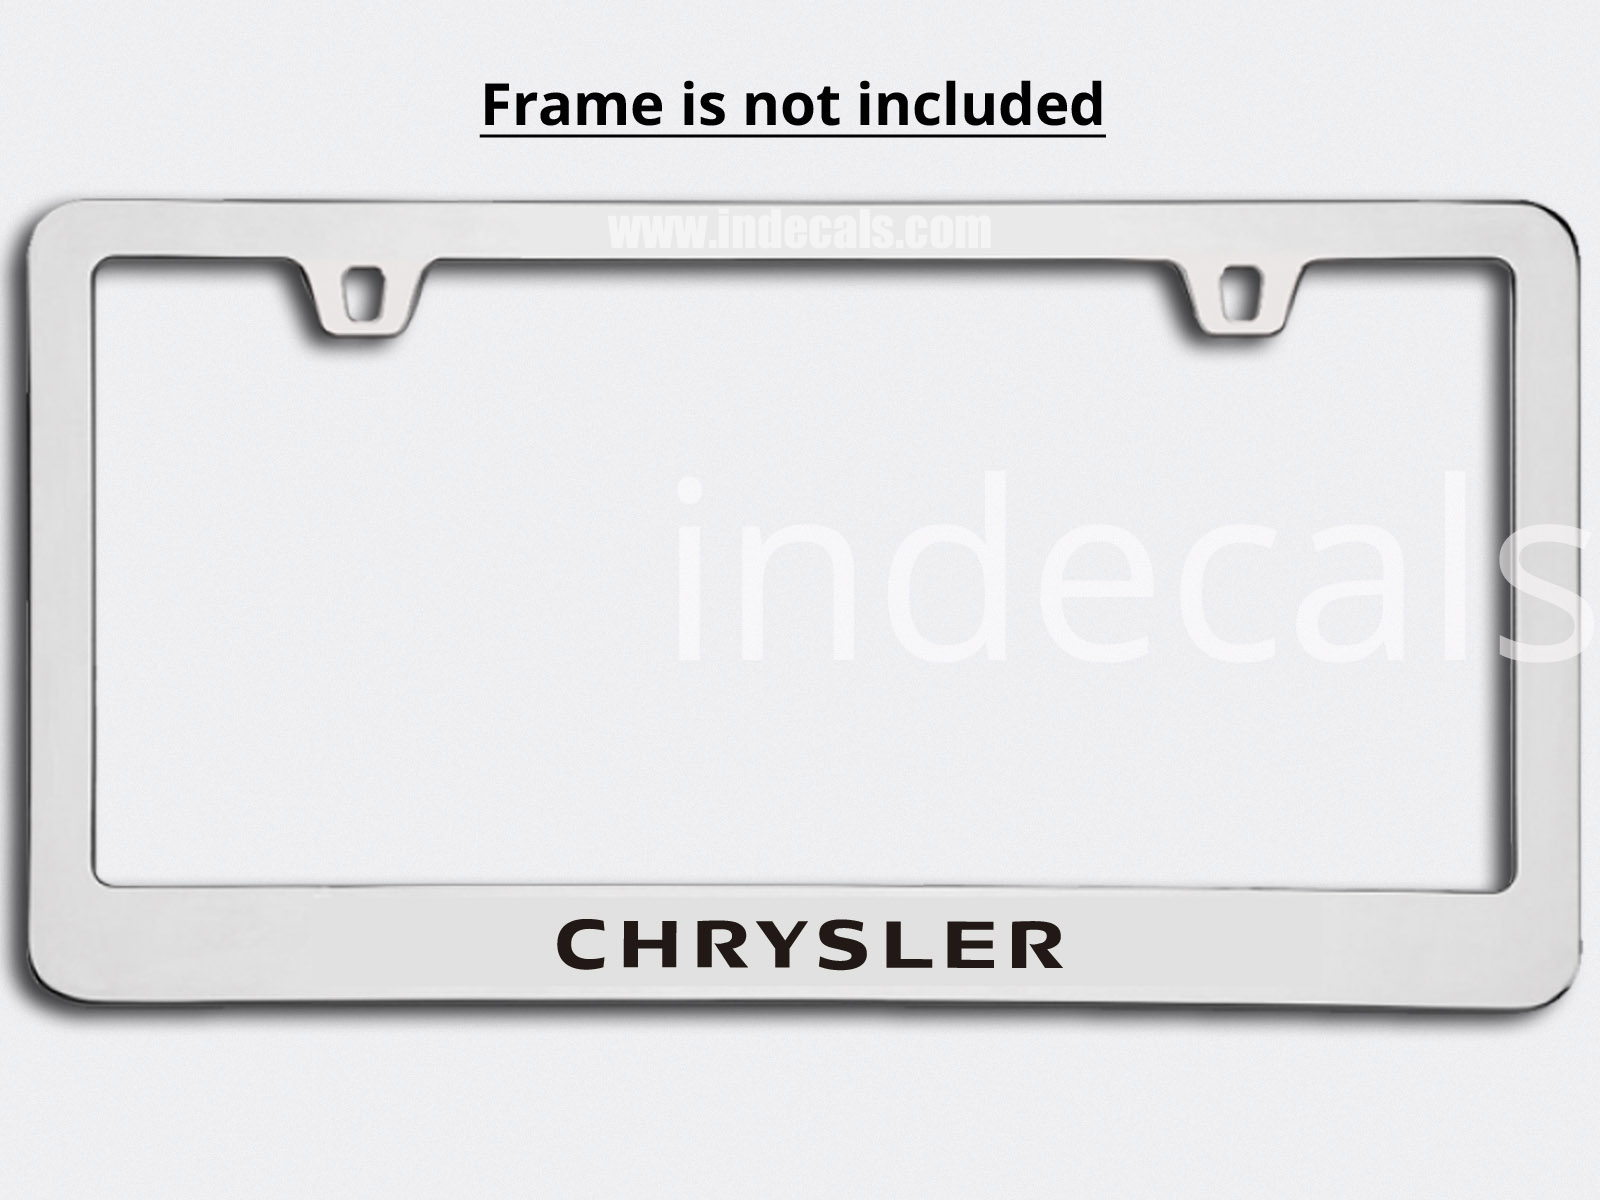 3 x Chrysler Stickers for Plate Frame - Black